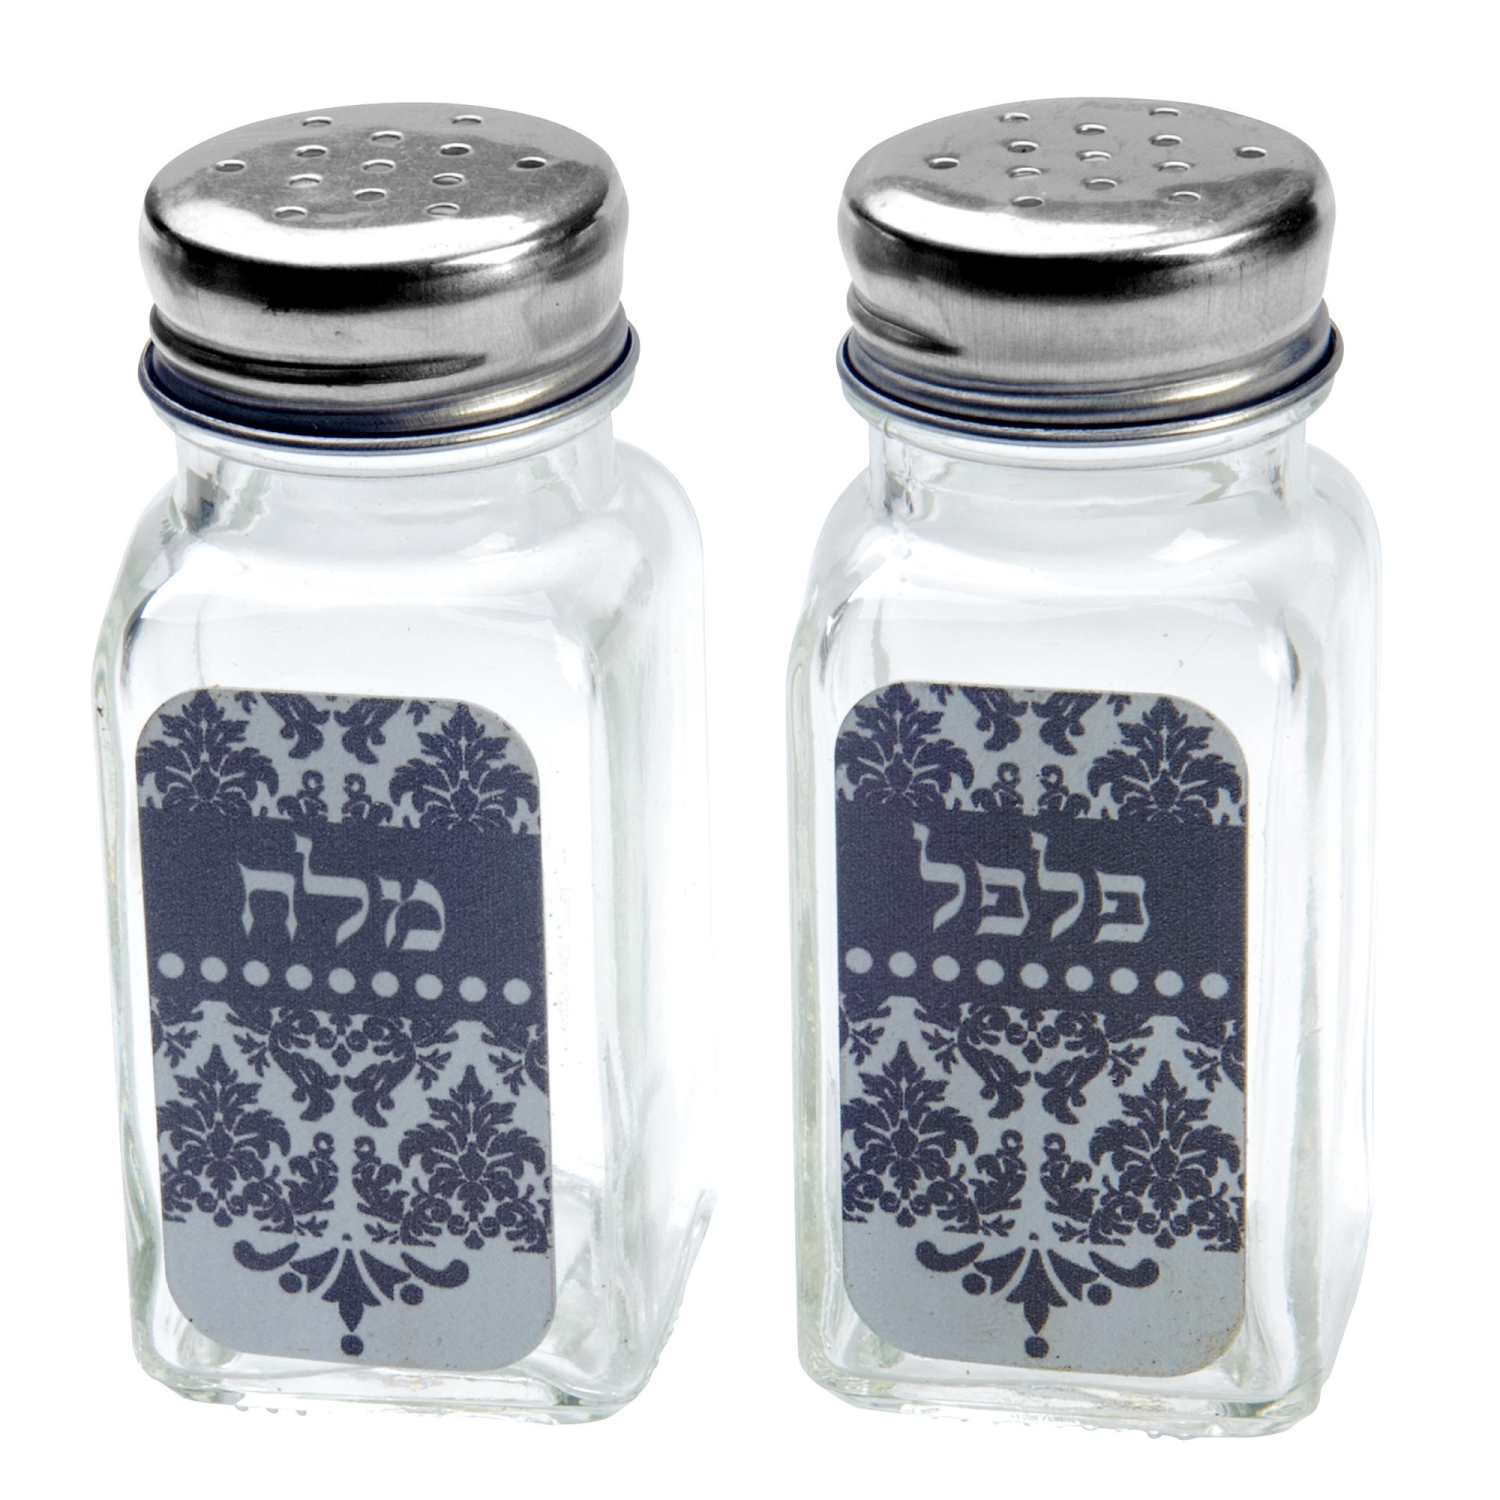 Dorit Judaica Salt and Pepper Set - Baroque Print - 1